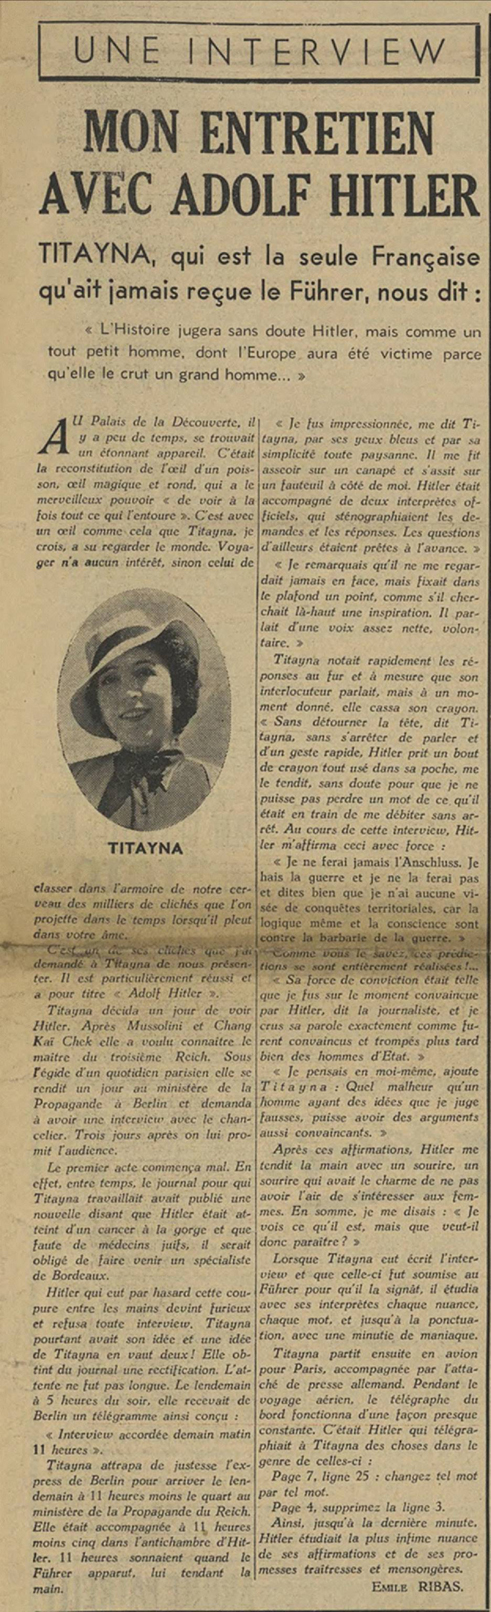 TITAYNA - Elisabeth SAUVY - Mon entretien avec Adolf Hitler